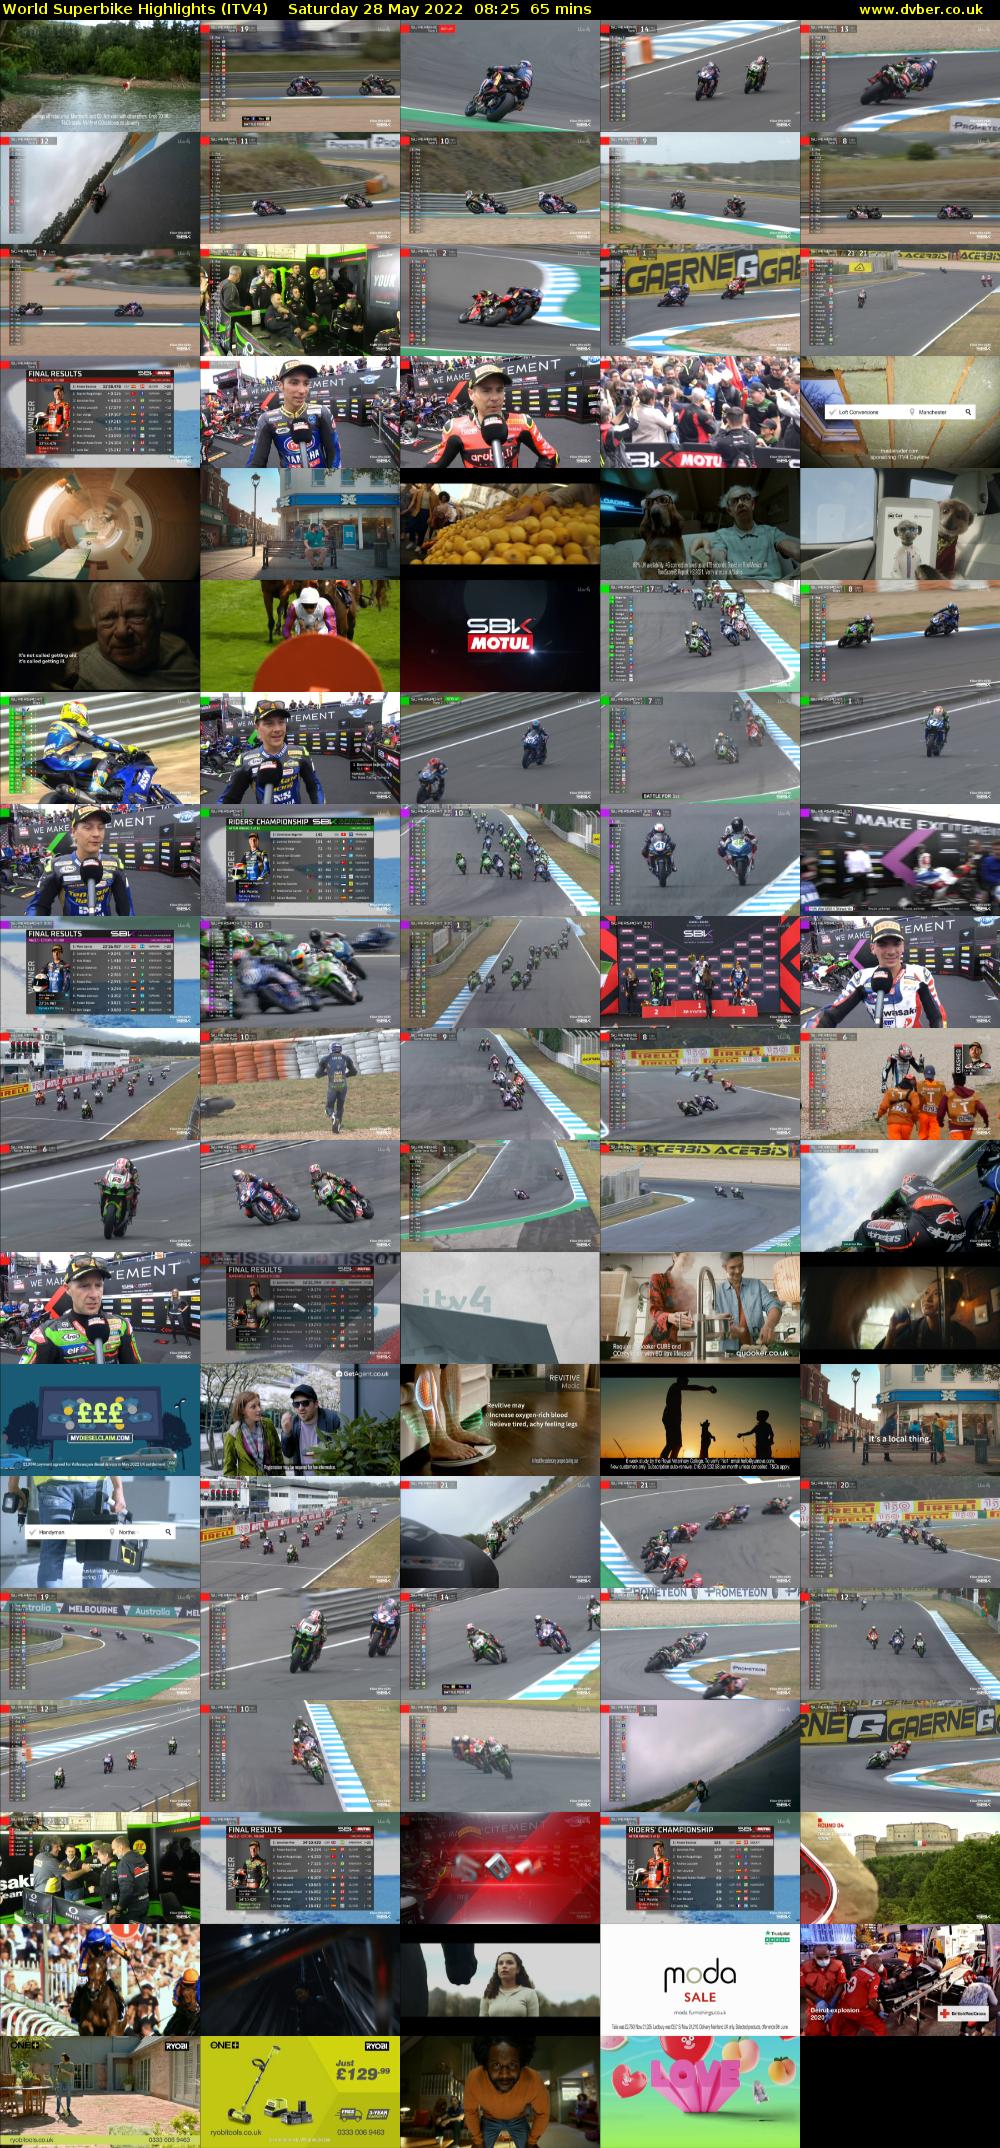 World Superbike Highlights (ITV4) Saturday 28 May 2022 08:25 - 09:30